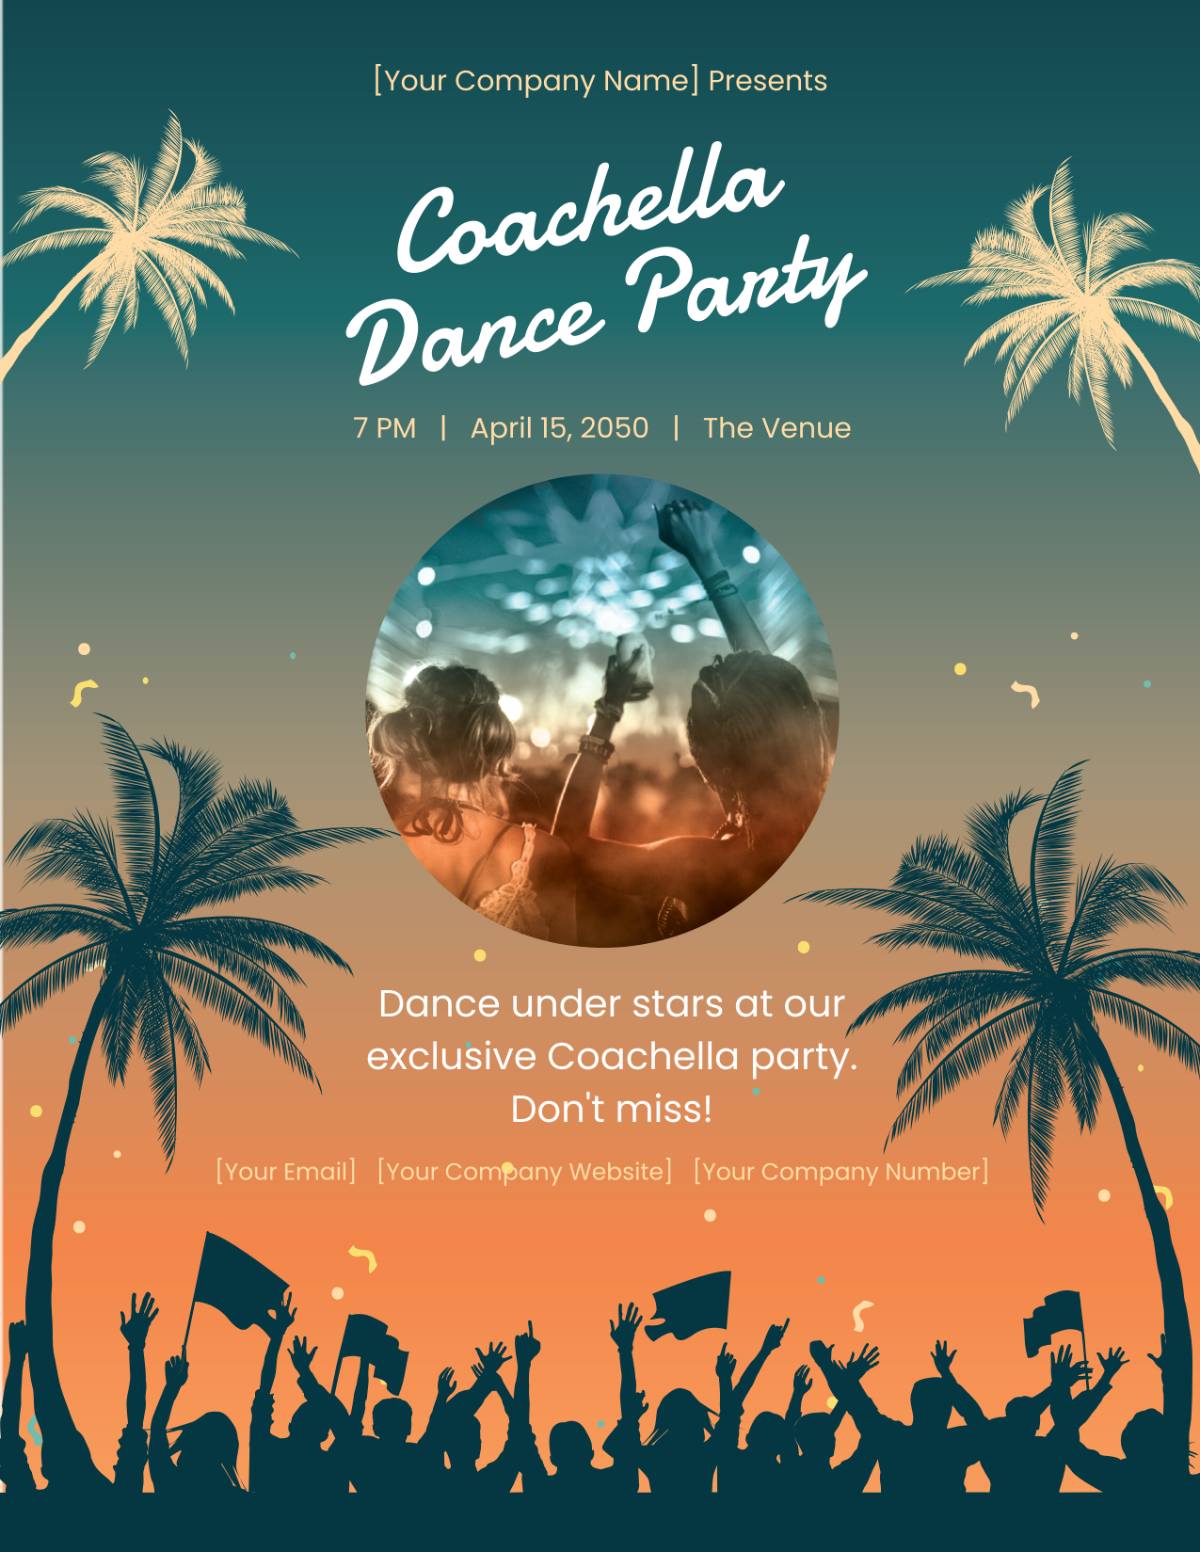 Coachella Dance Party Flyer